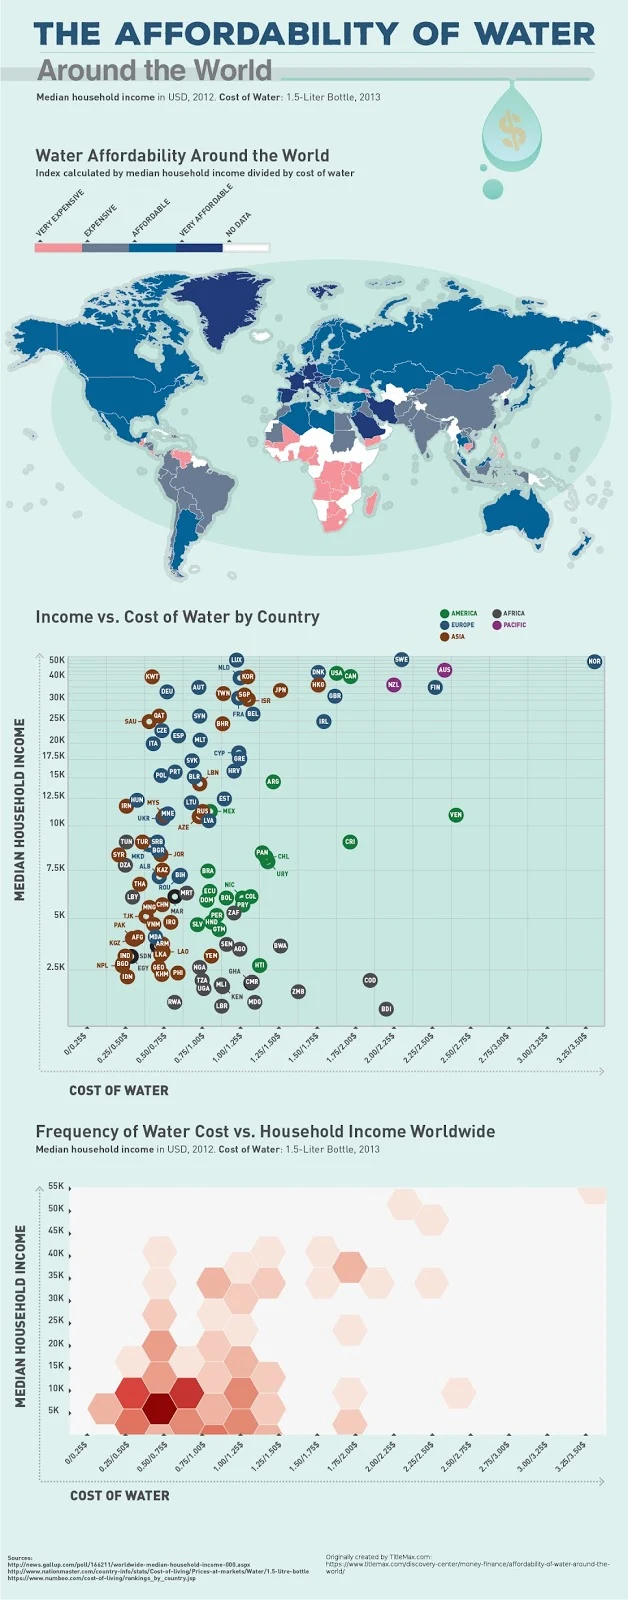 Water affordability